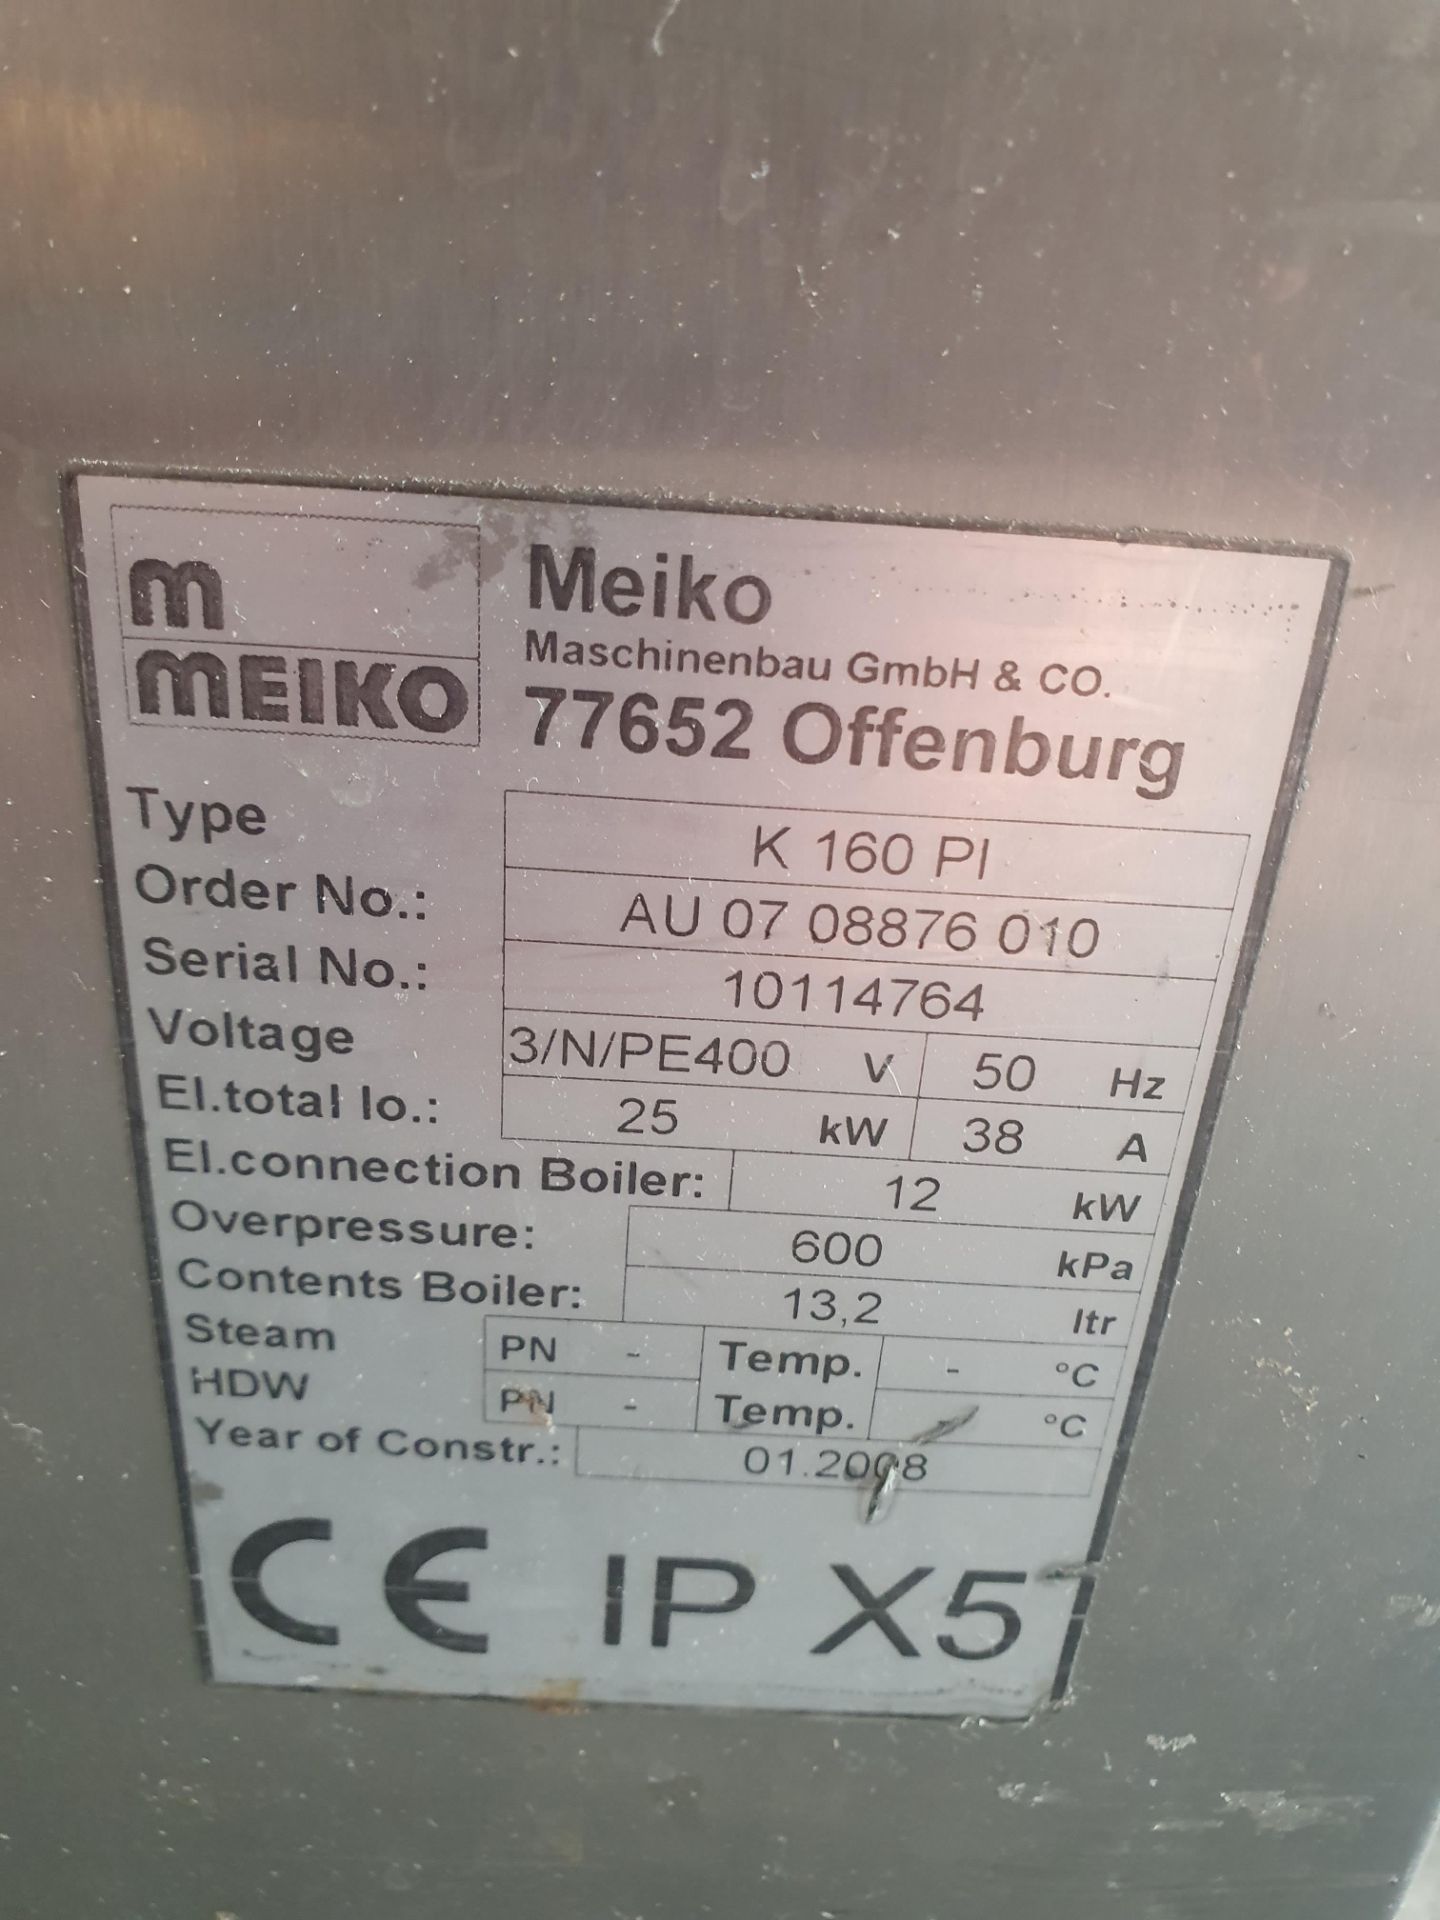 Meiko K160 PI Convayor Rack Dishwasher With Convayor Feed Table and Osmosis Unit - Image 2 of 4